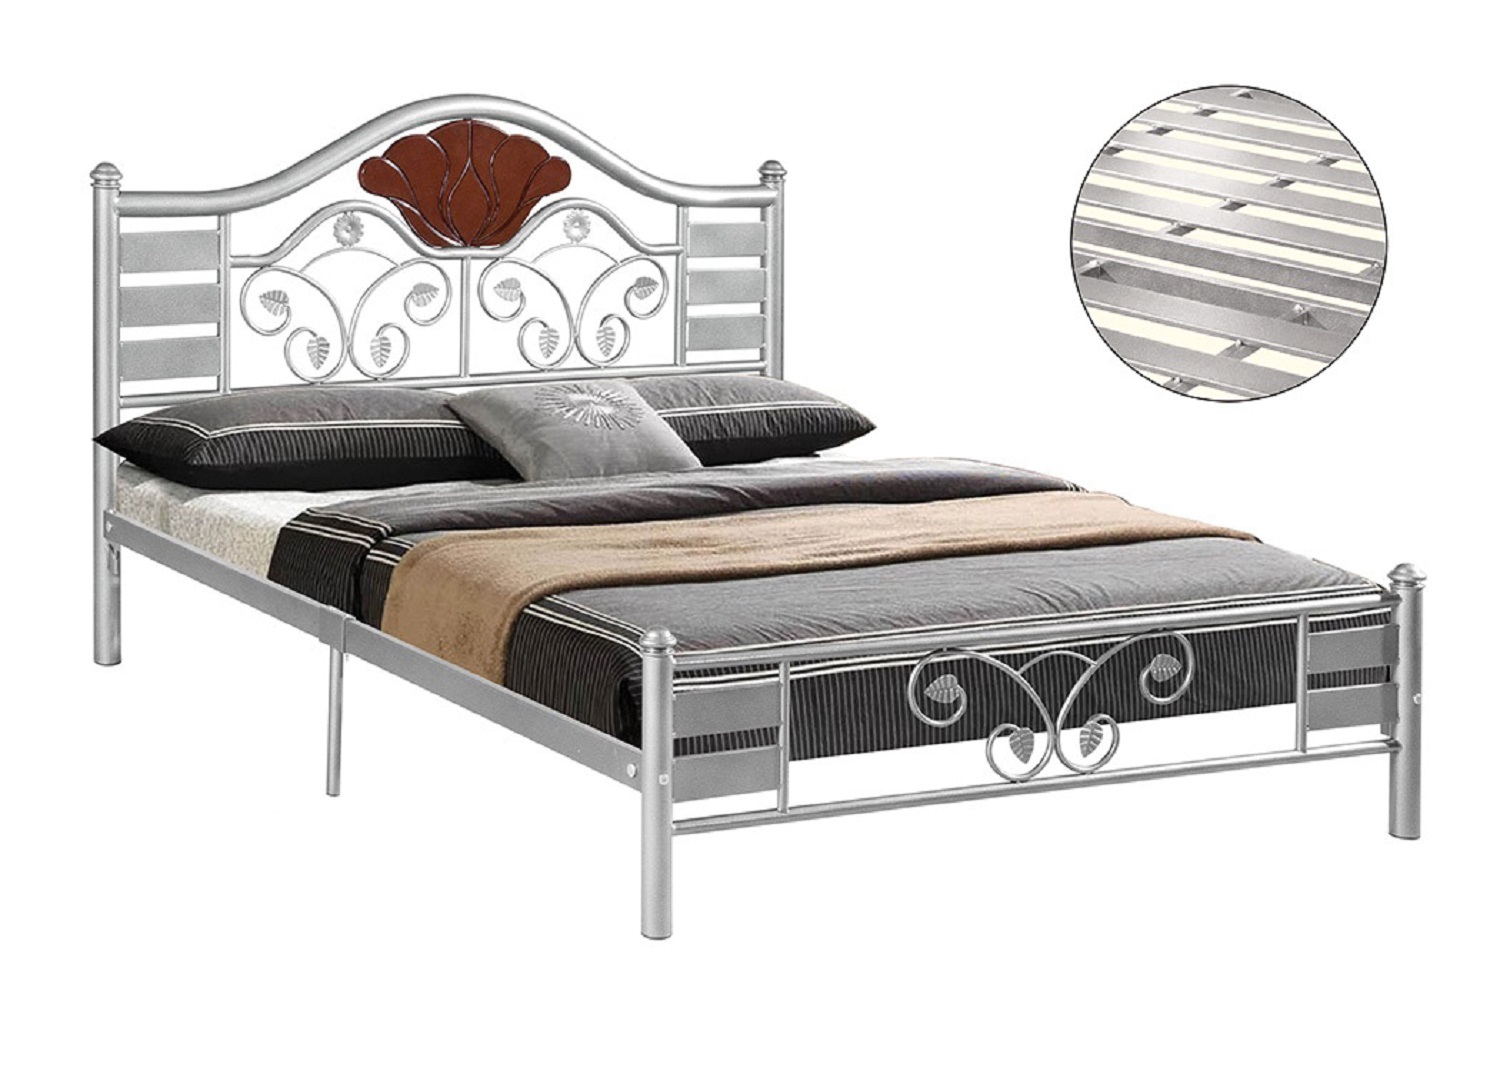 AIMIZON Lonte queen bed with Antique Silver colour